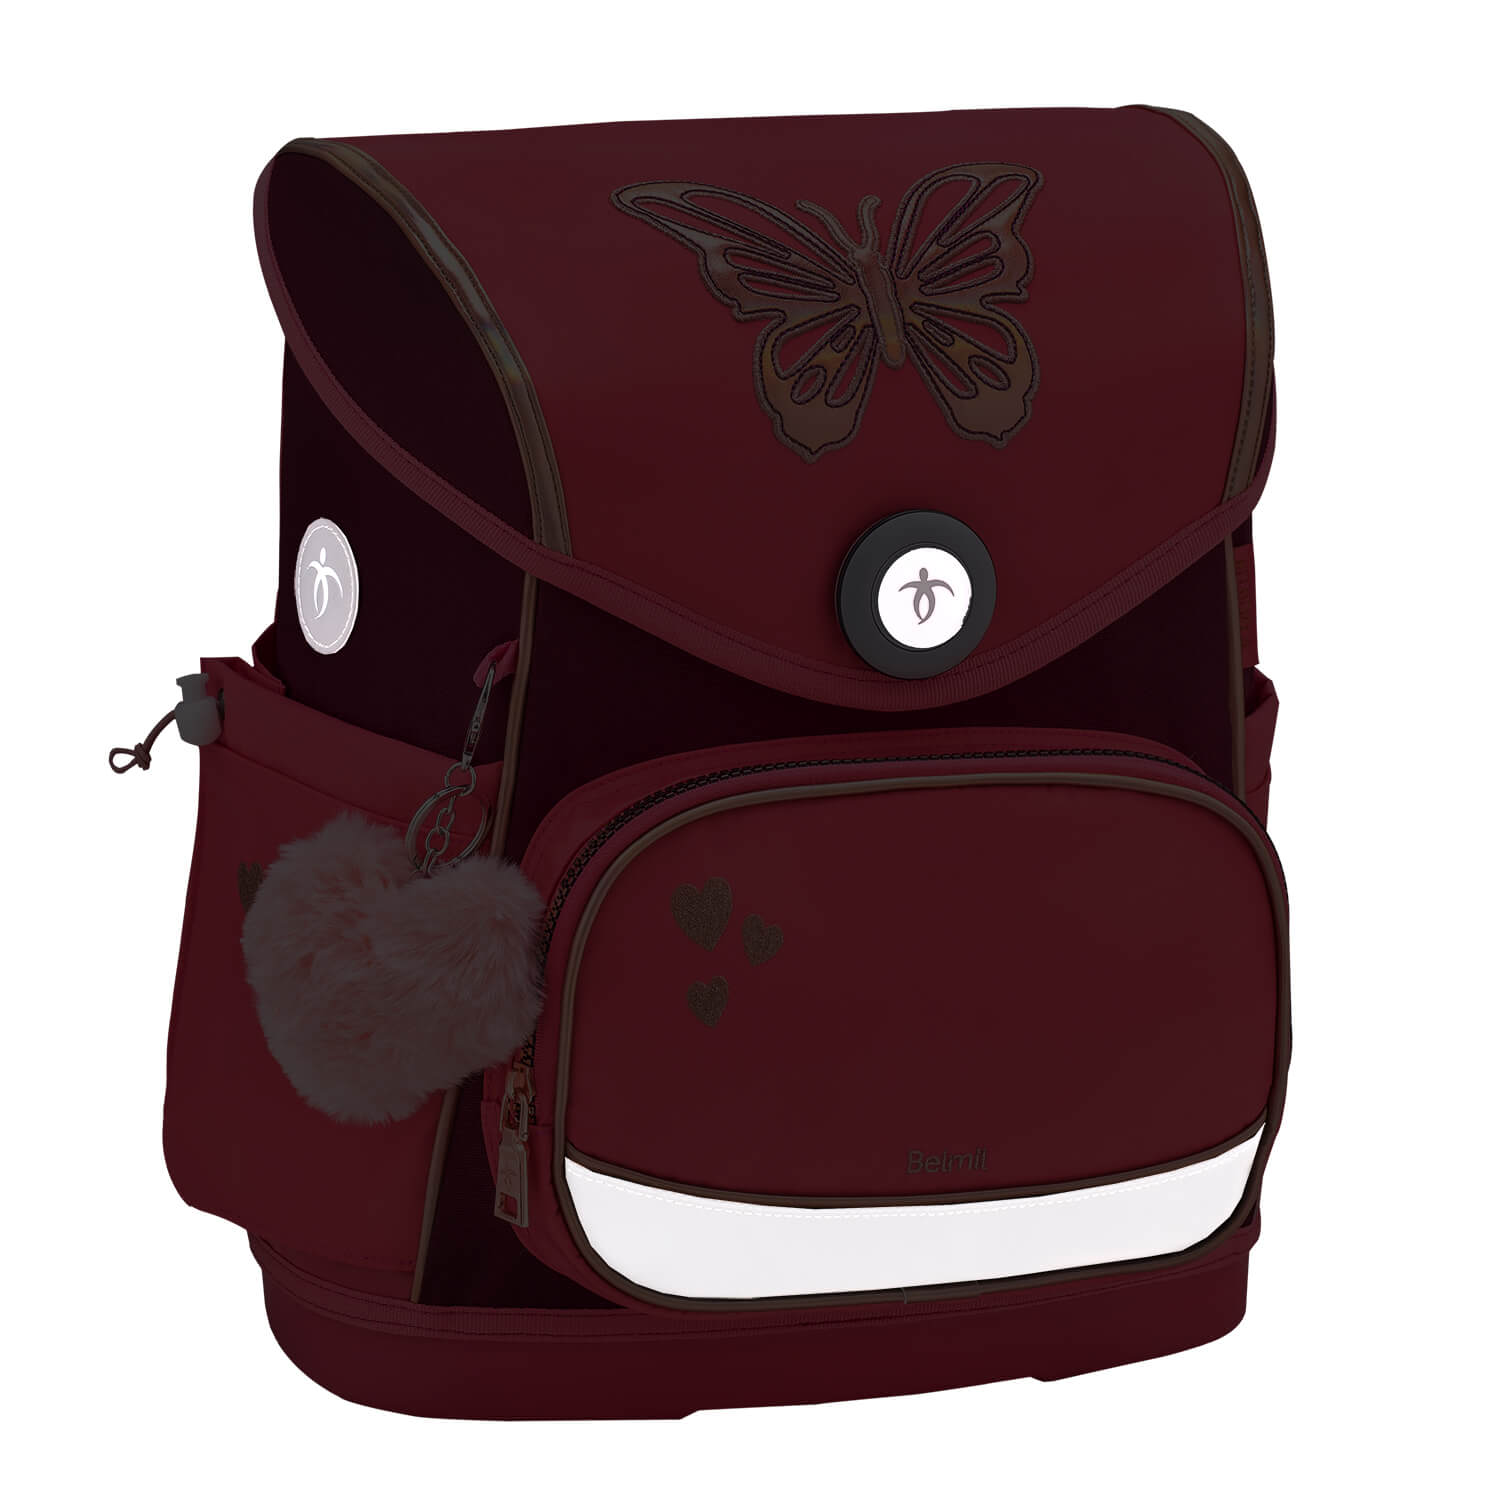 Premium Compact Plus Coral Schoolbag